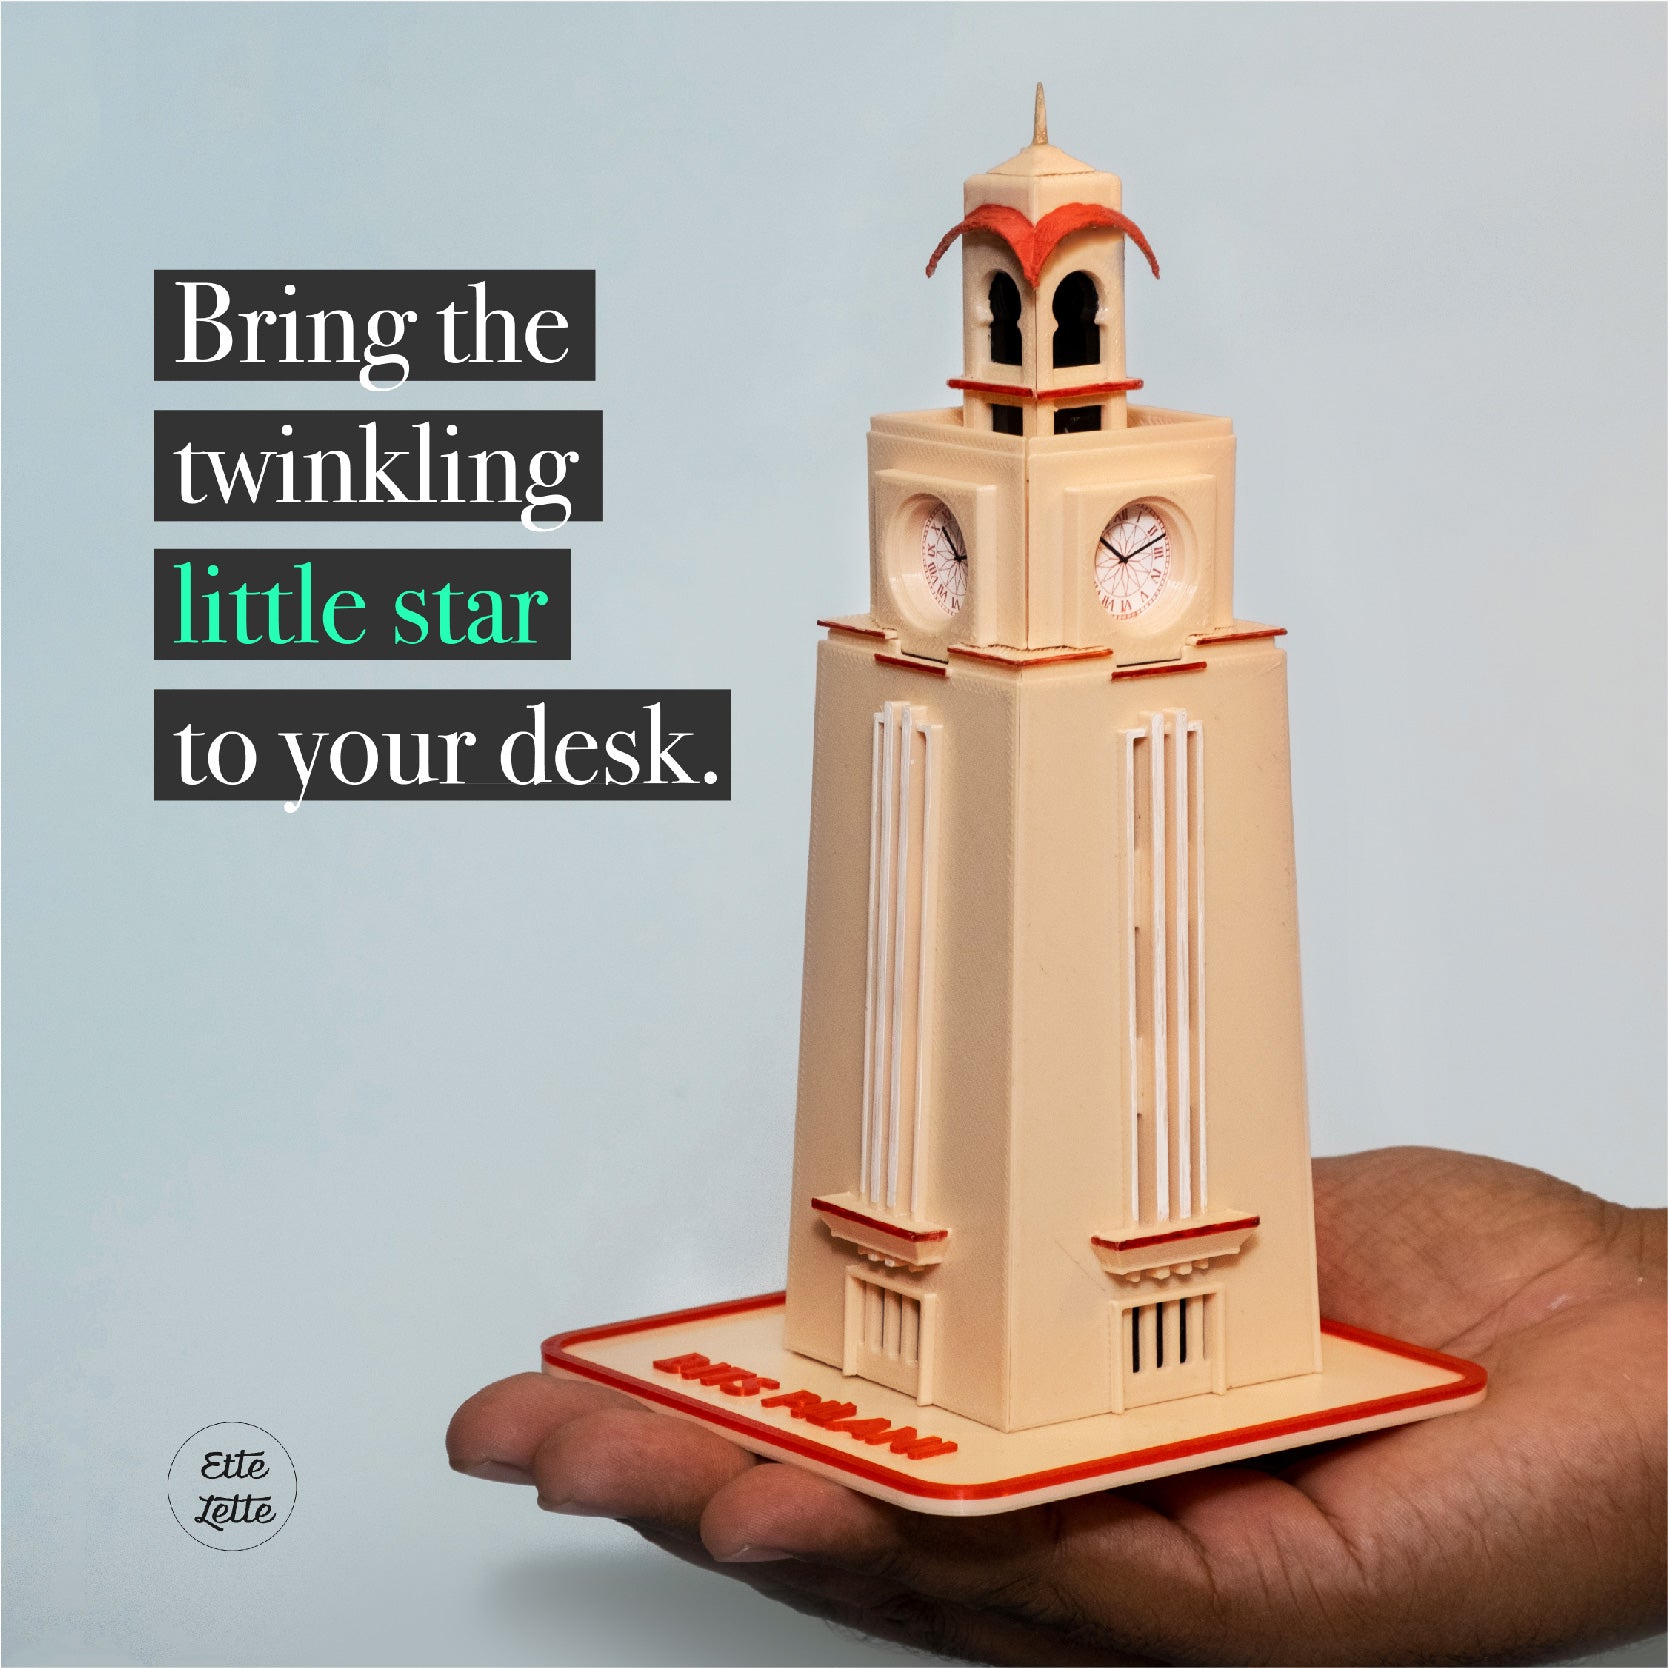 Miniature Clock Tower - BITS Pilani Souvenir